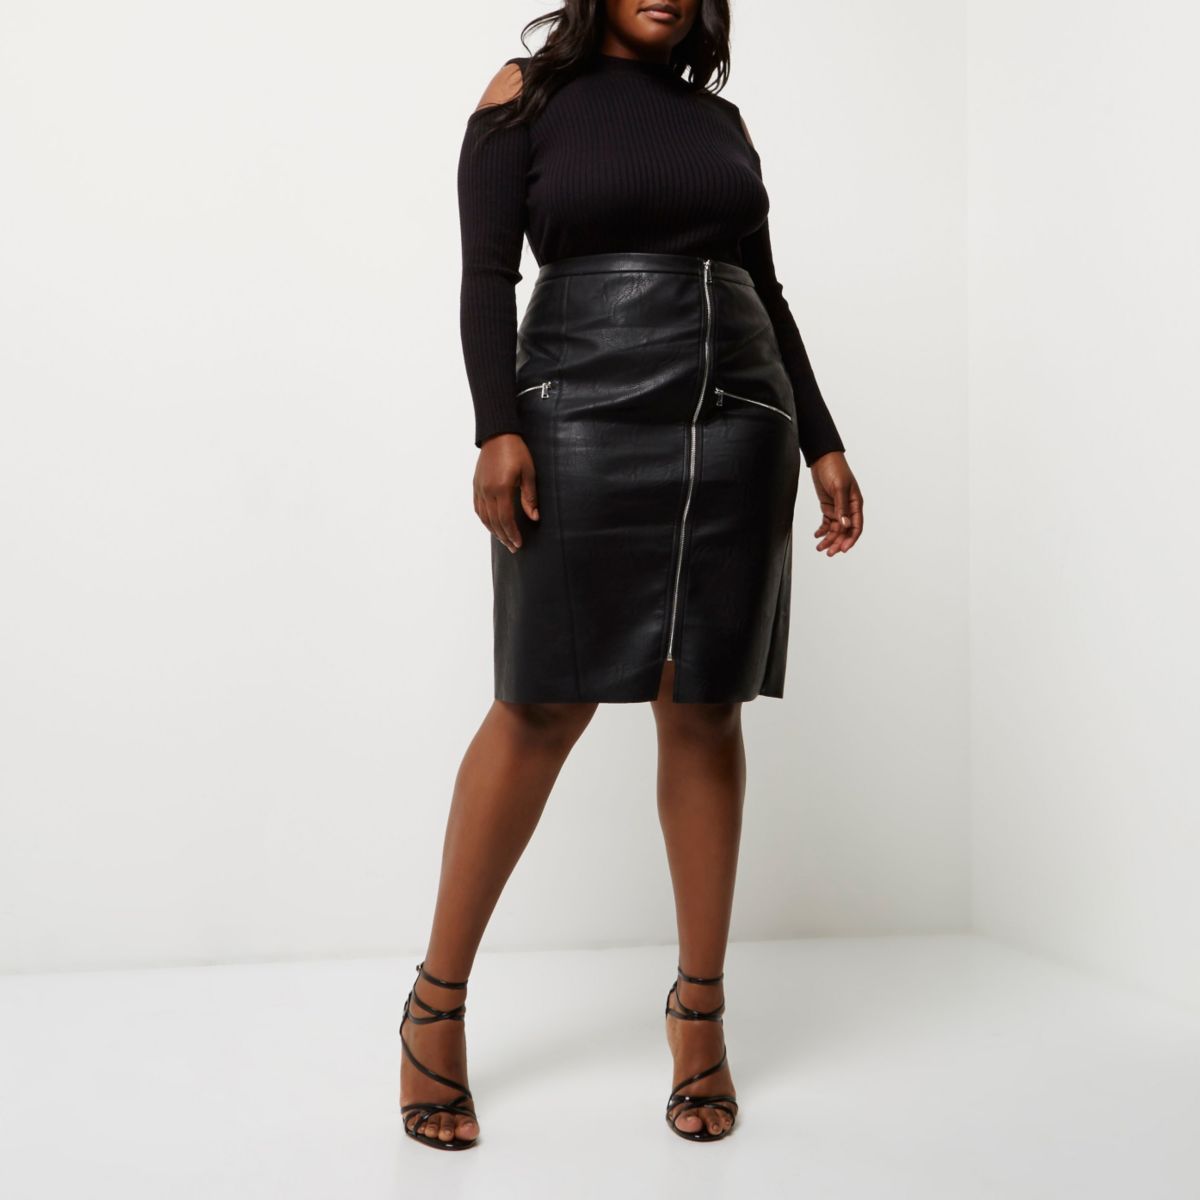 Plus black leather look pencil skirt - Skirts - Sale - women